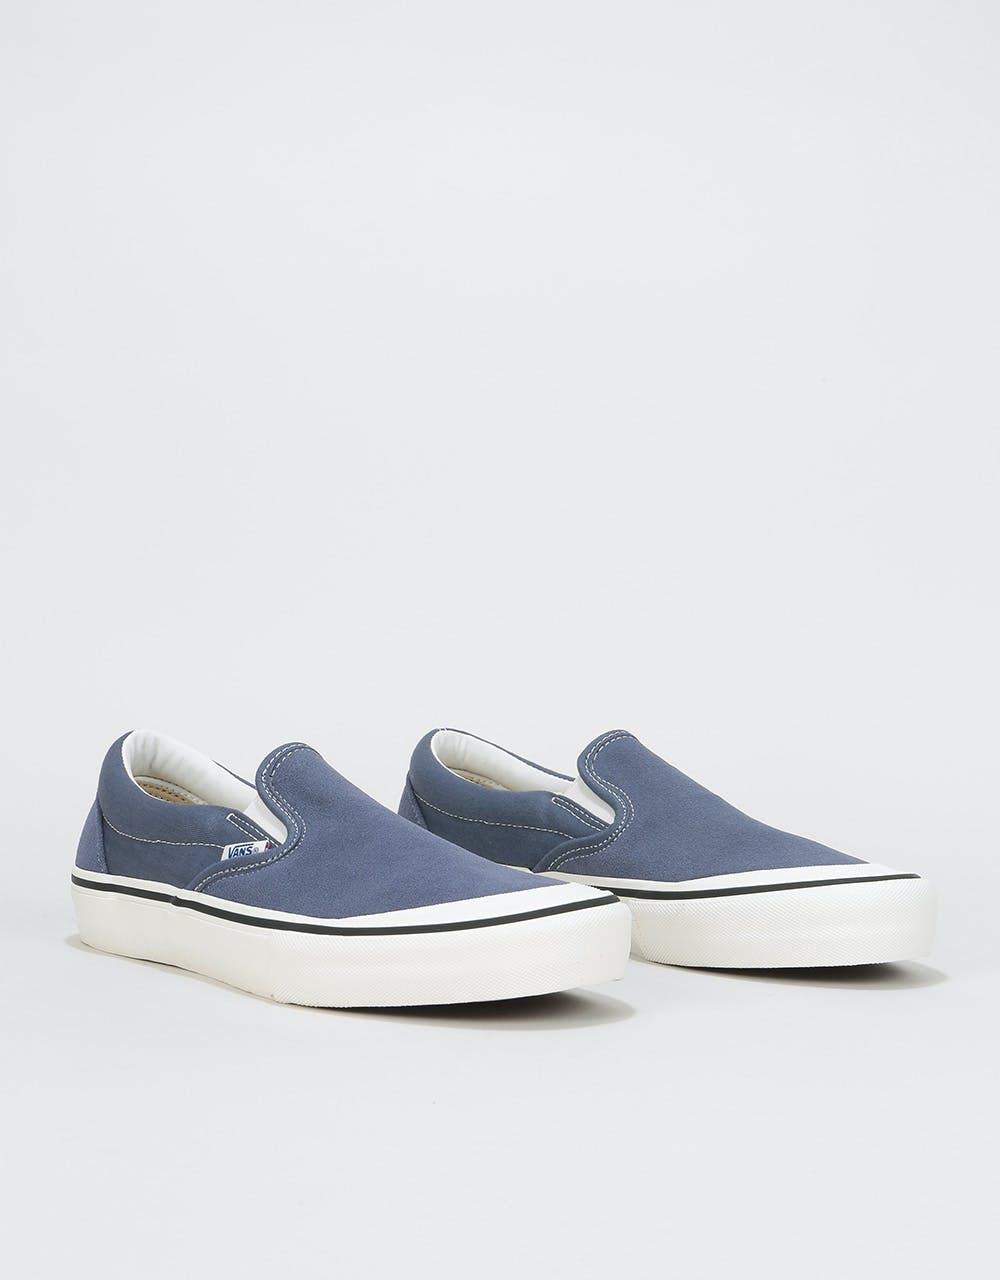 Vans Slip-On Pro Skate Shoes - (Retro) Grisaille